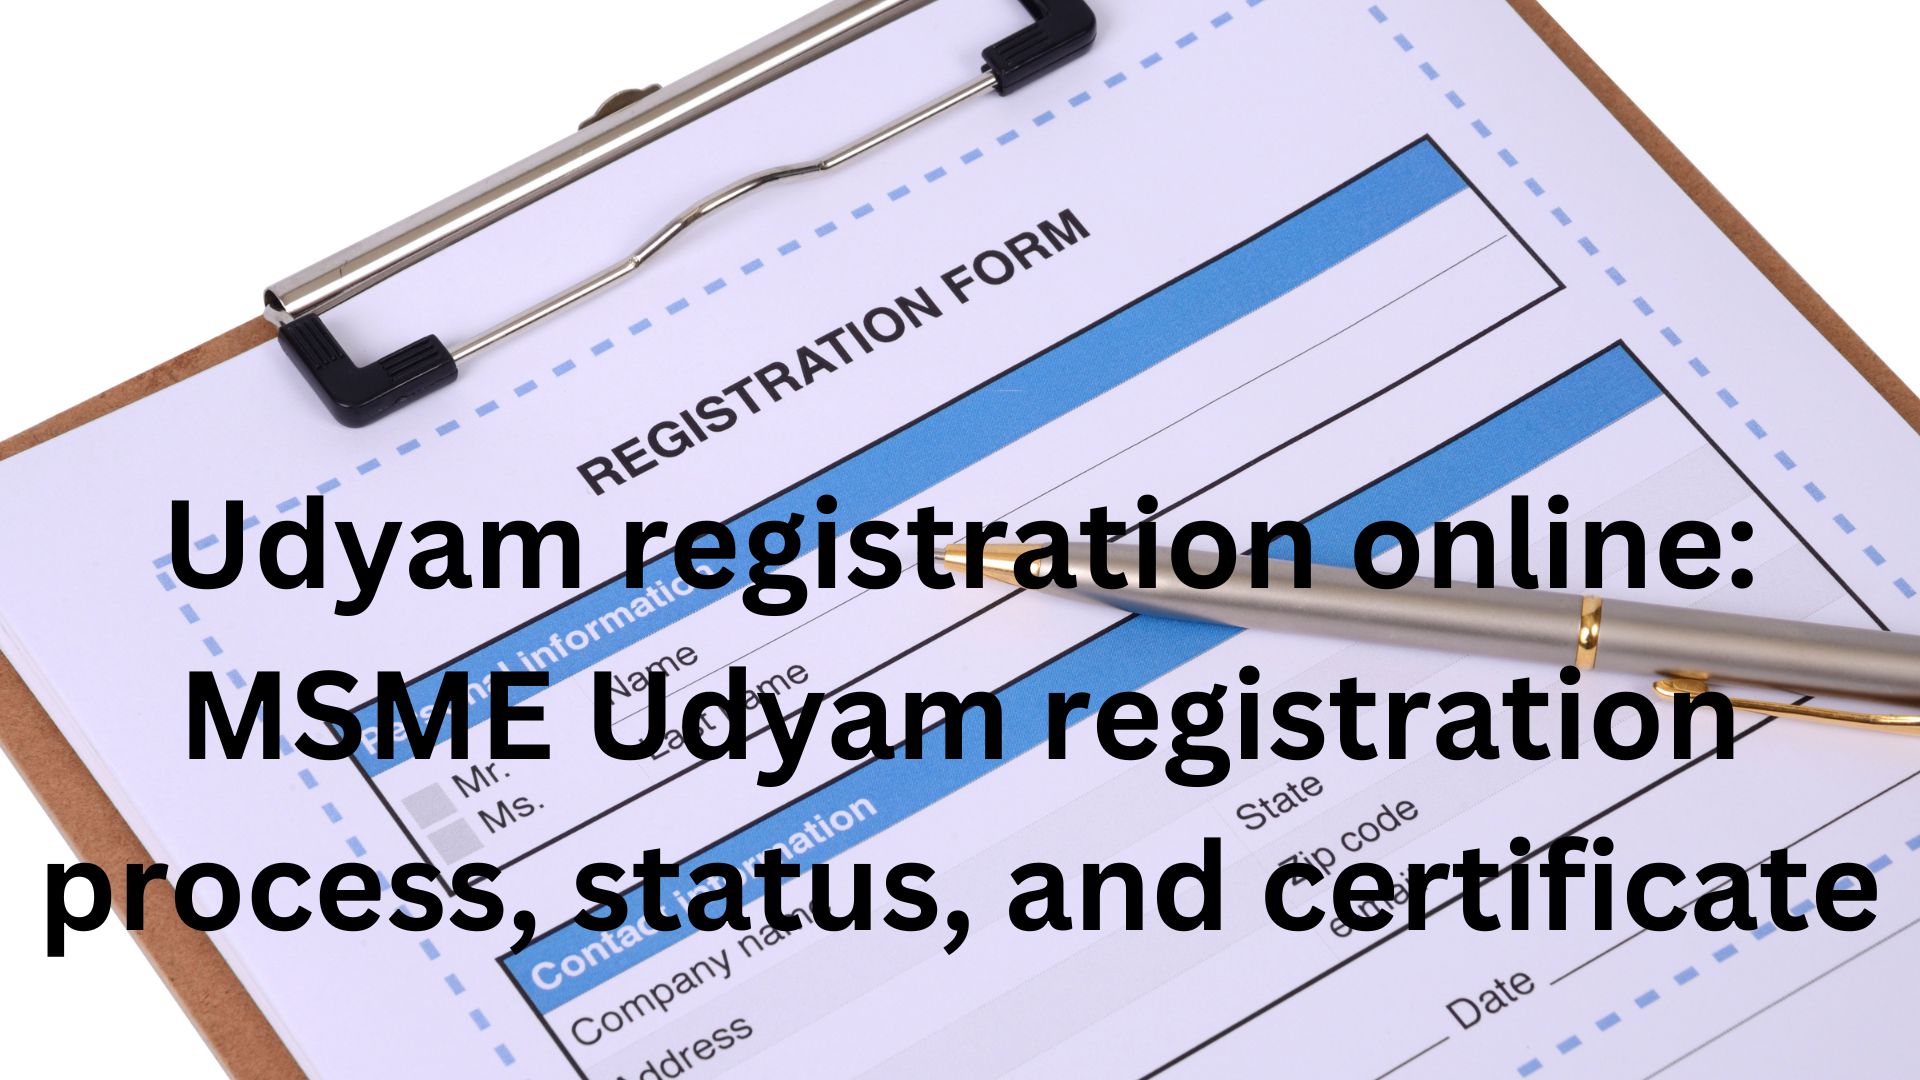 Udyam registration online: MSME Udyam registration process, status, and certificate